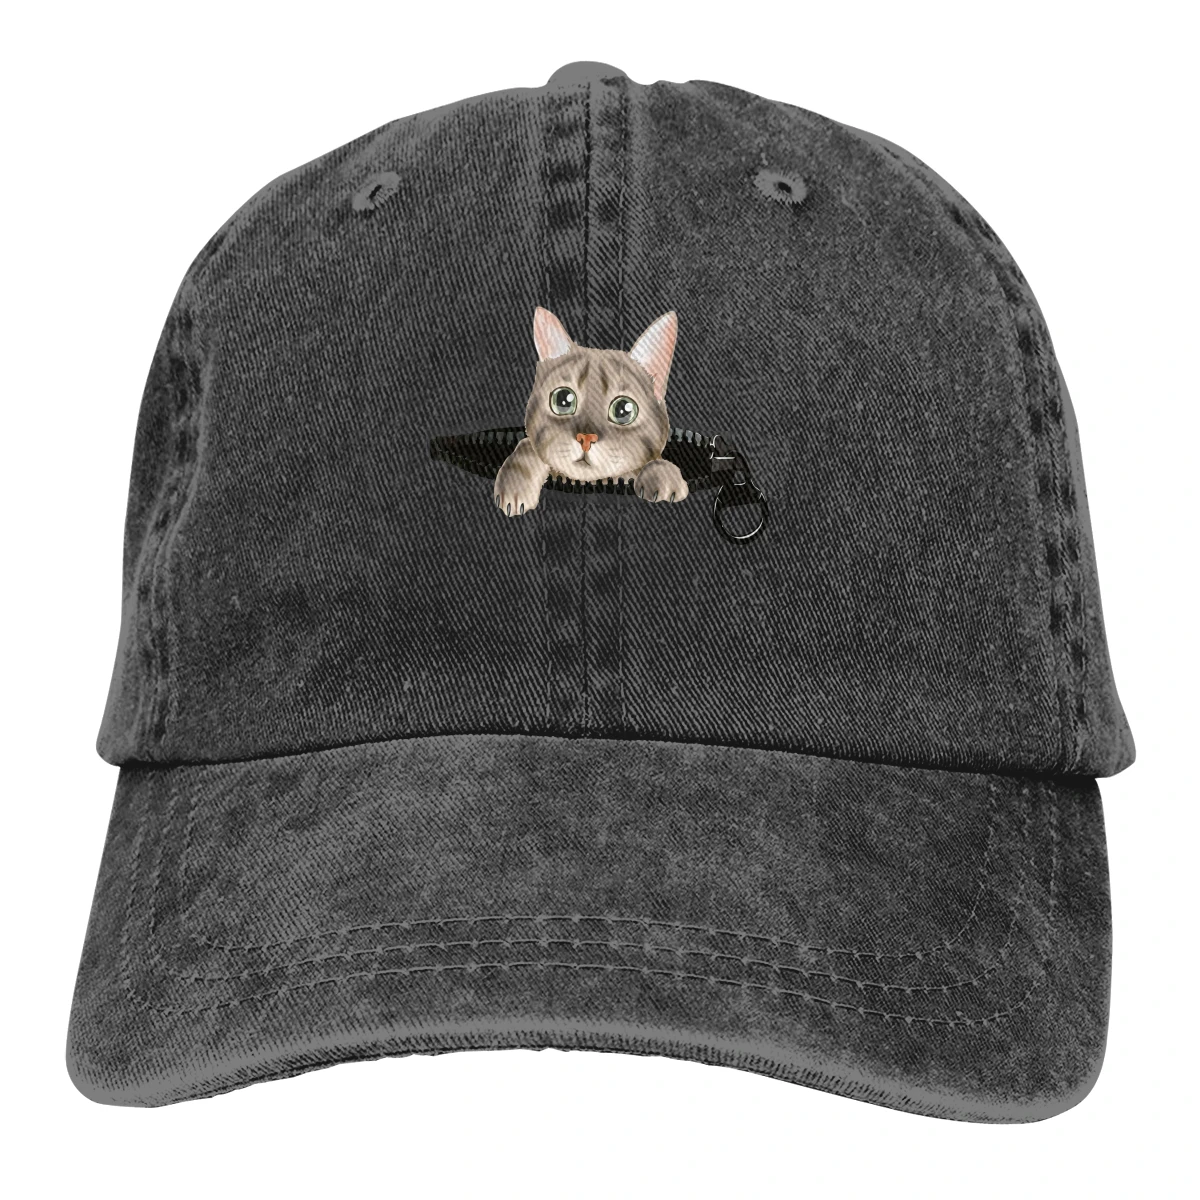 Cute Cat In Zip Pocket Retro Baseball Cap Cowboy Hat Fitted Cap Snapback Hat for Men Women Casual Cap Sun Hat Outdoor Cap